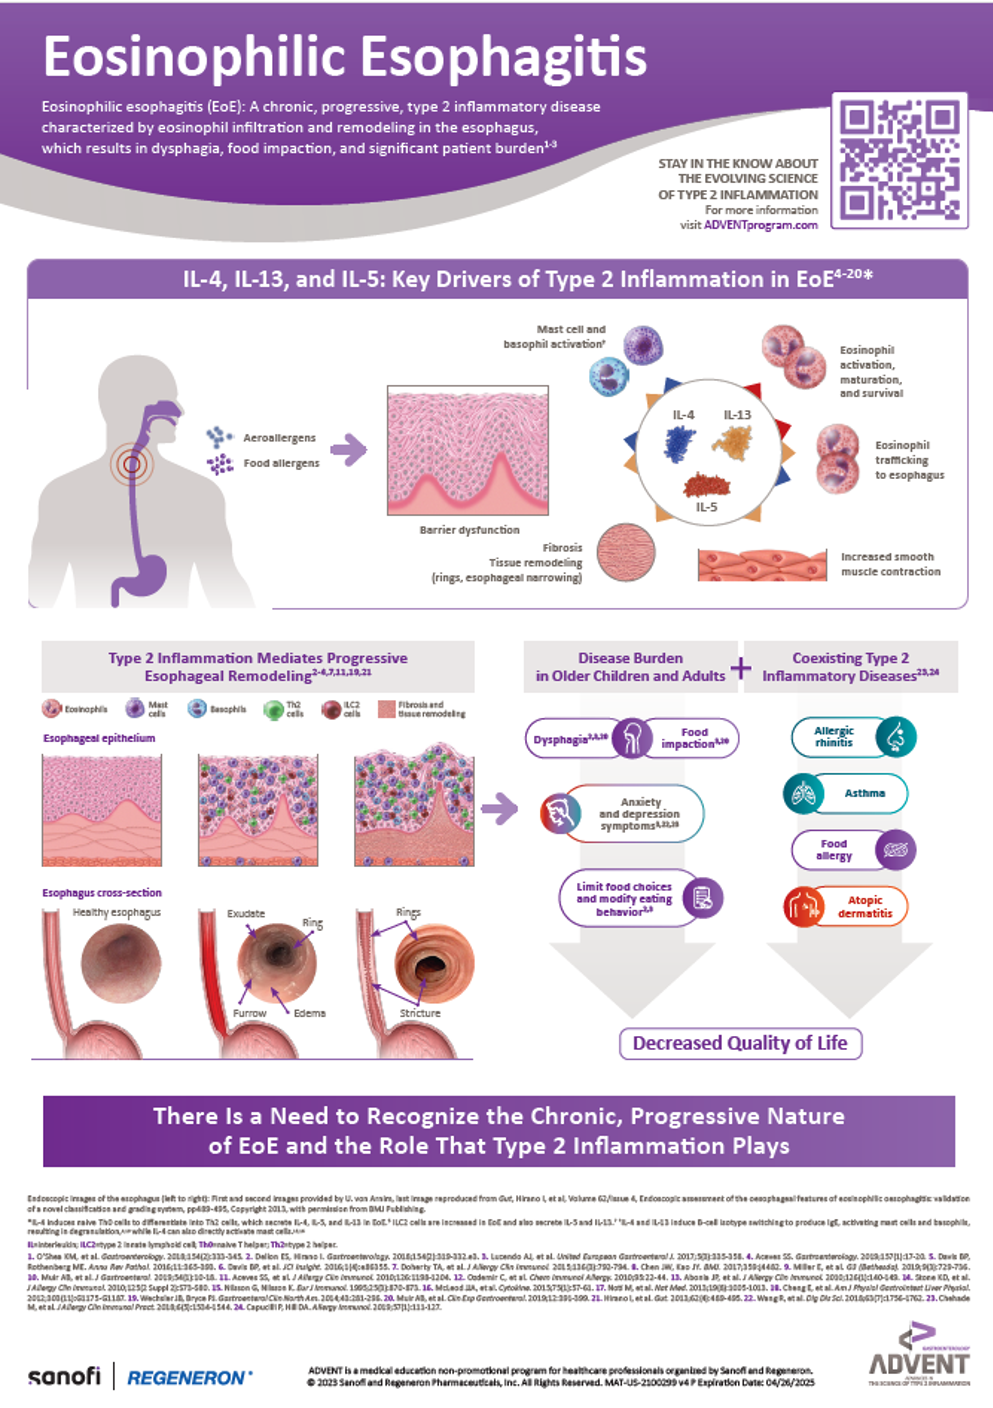 Eosinophilic Esophagitis: A Chronic, Progressive, Type 2 Inflammatory Disease Infographic